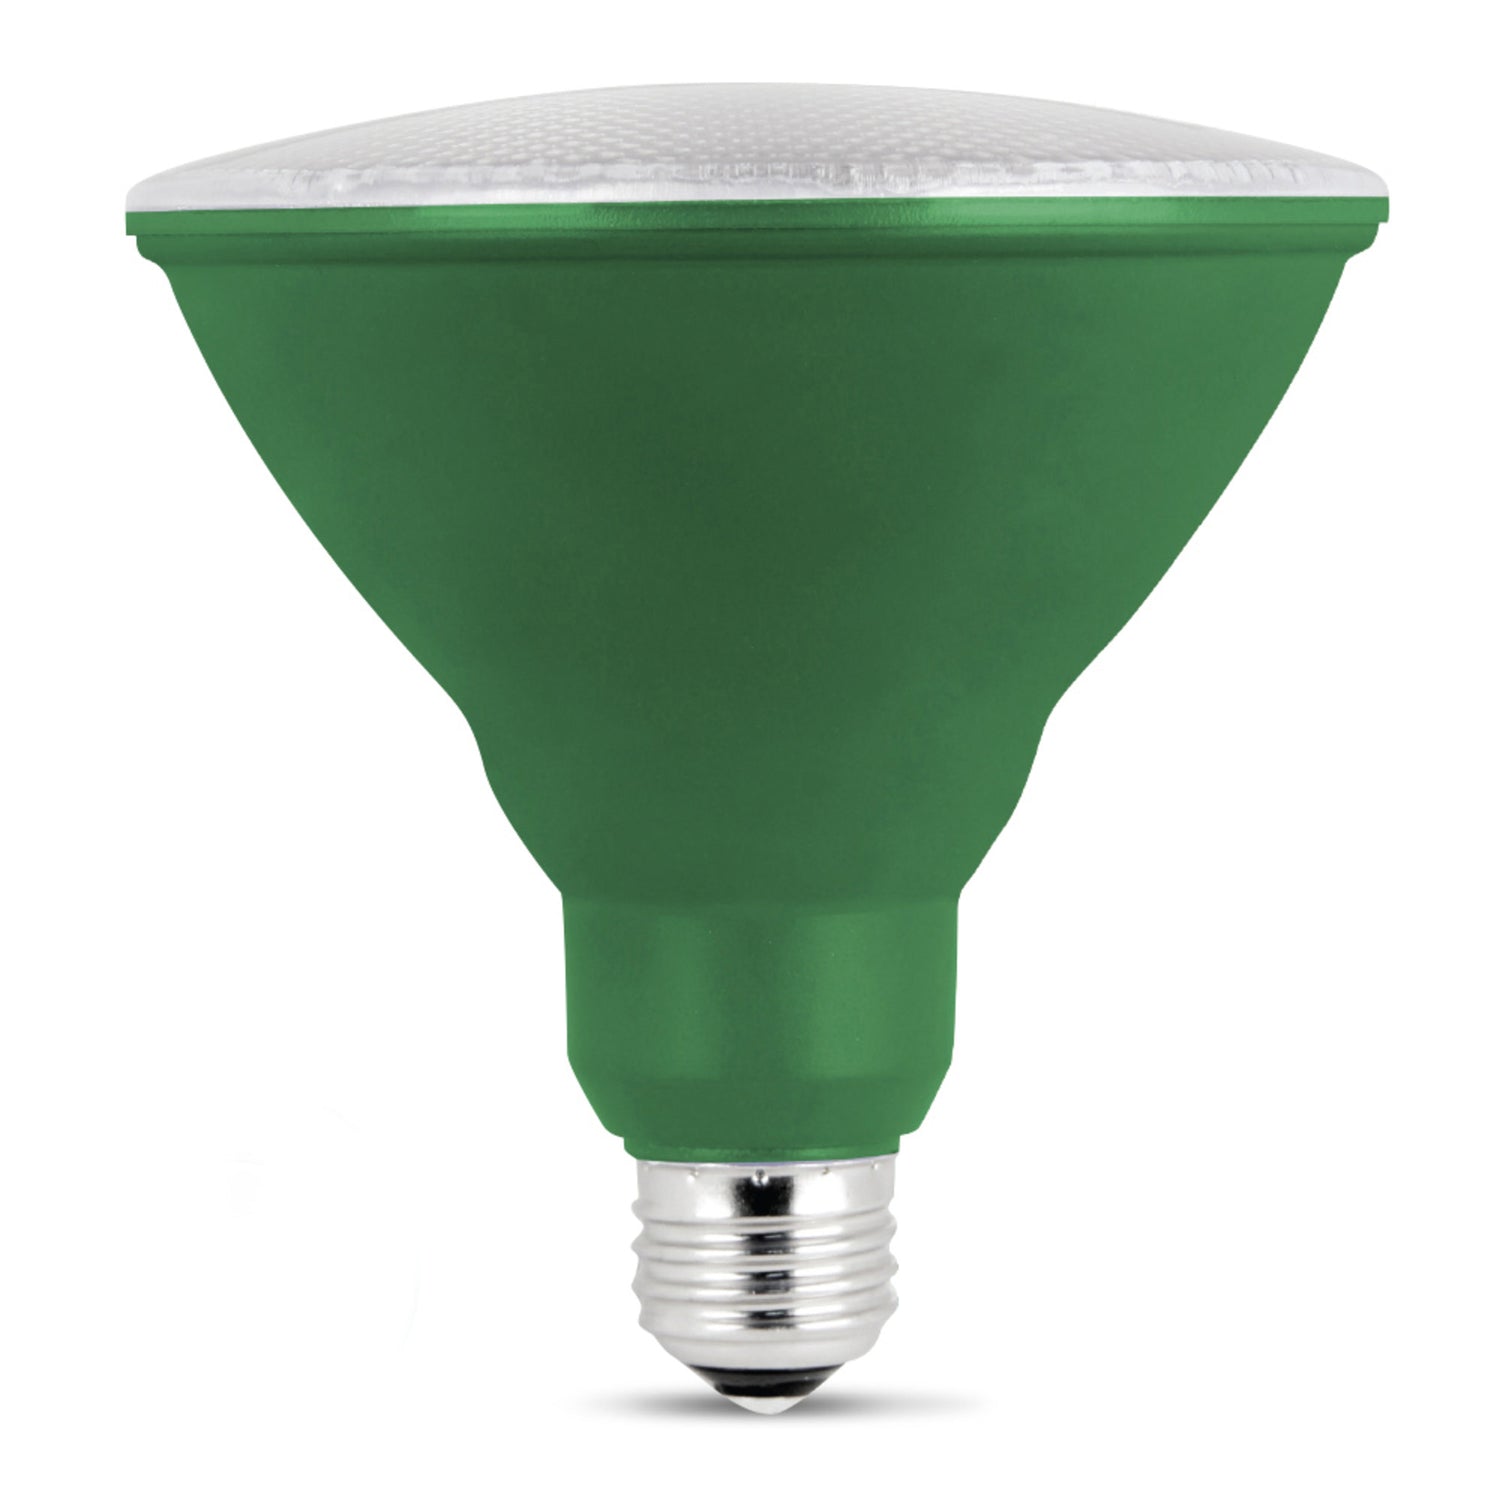 Green PAR38 Non-Dimmable LED Reflector Light Bulb (24-Pack)